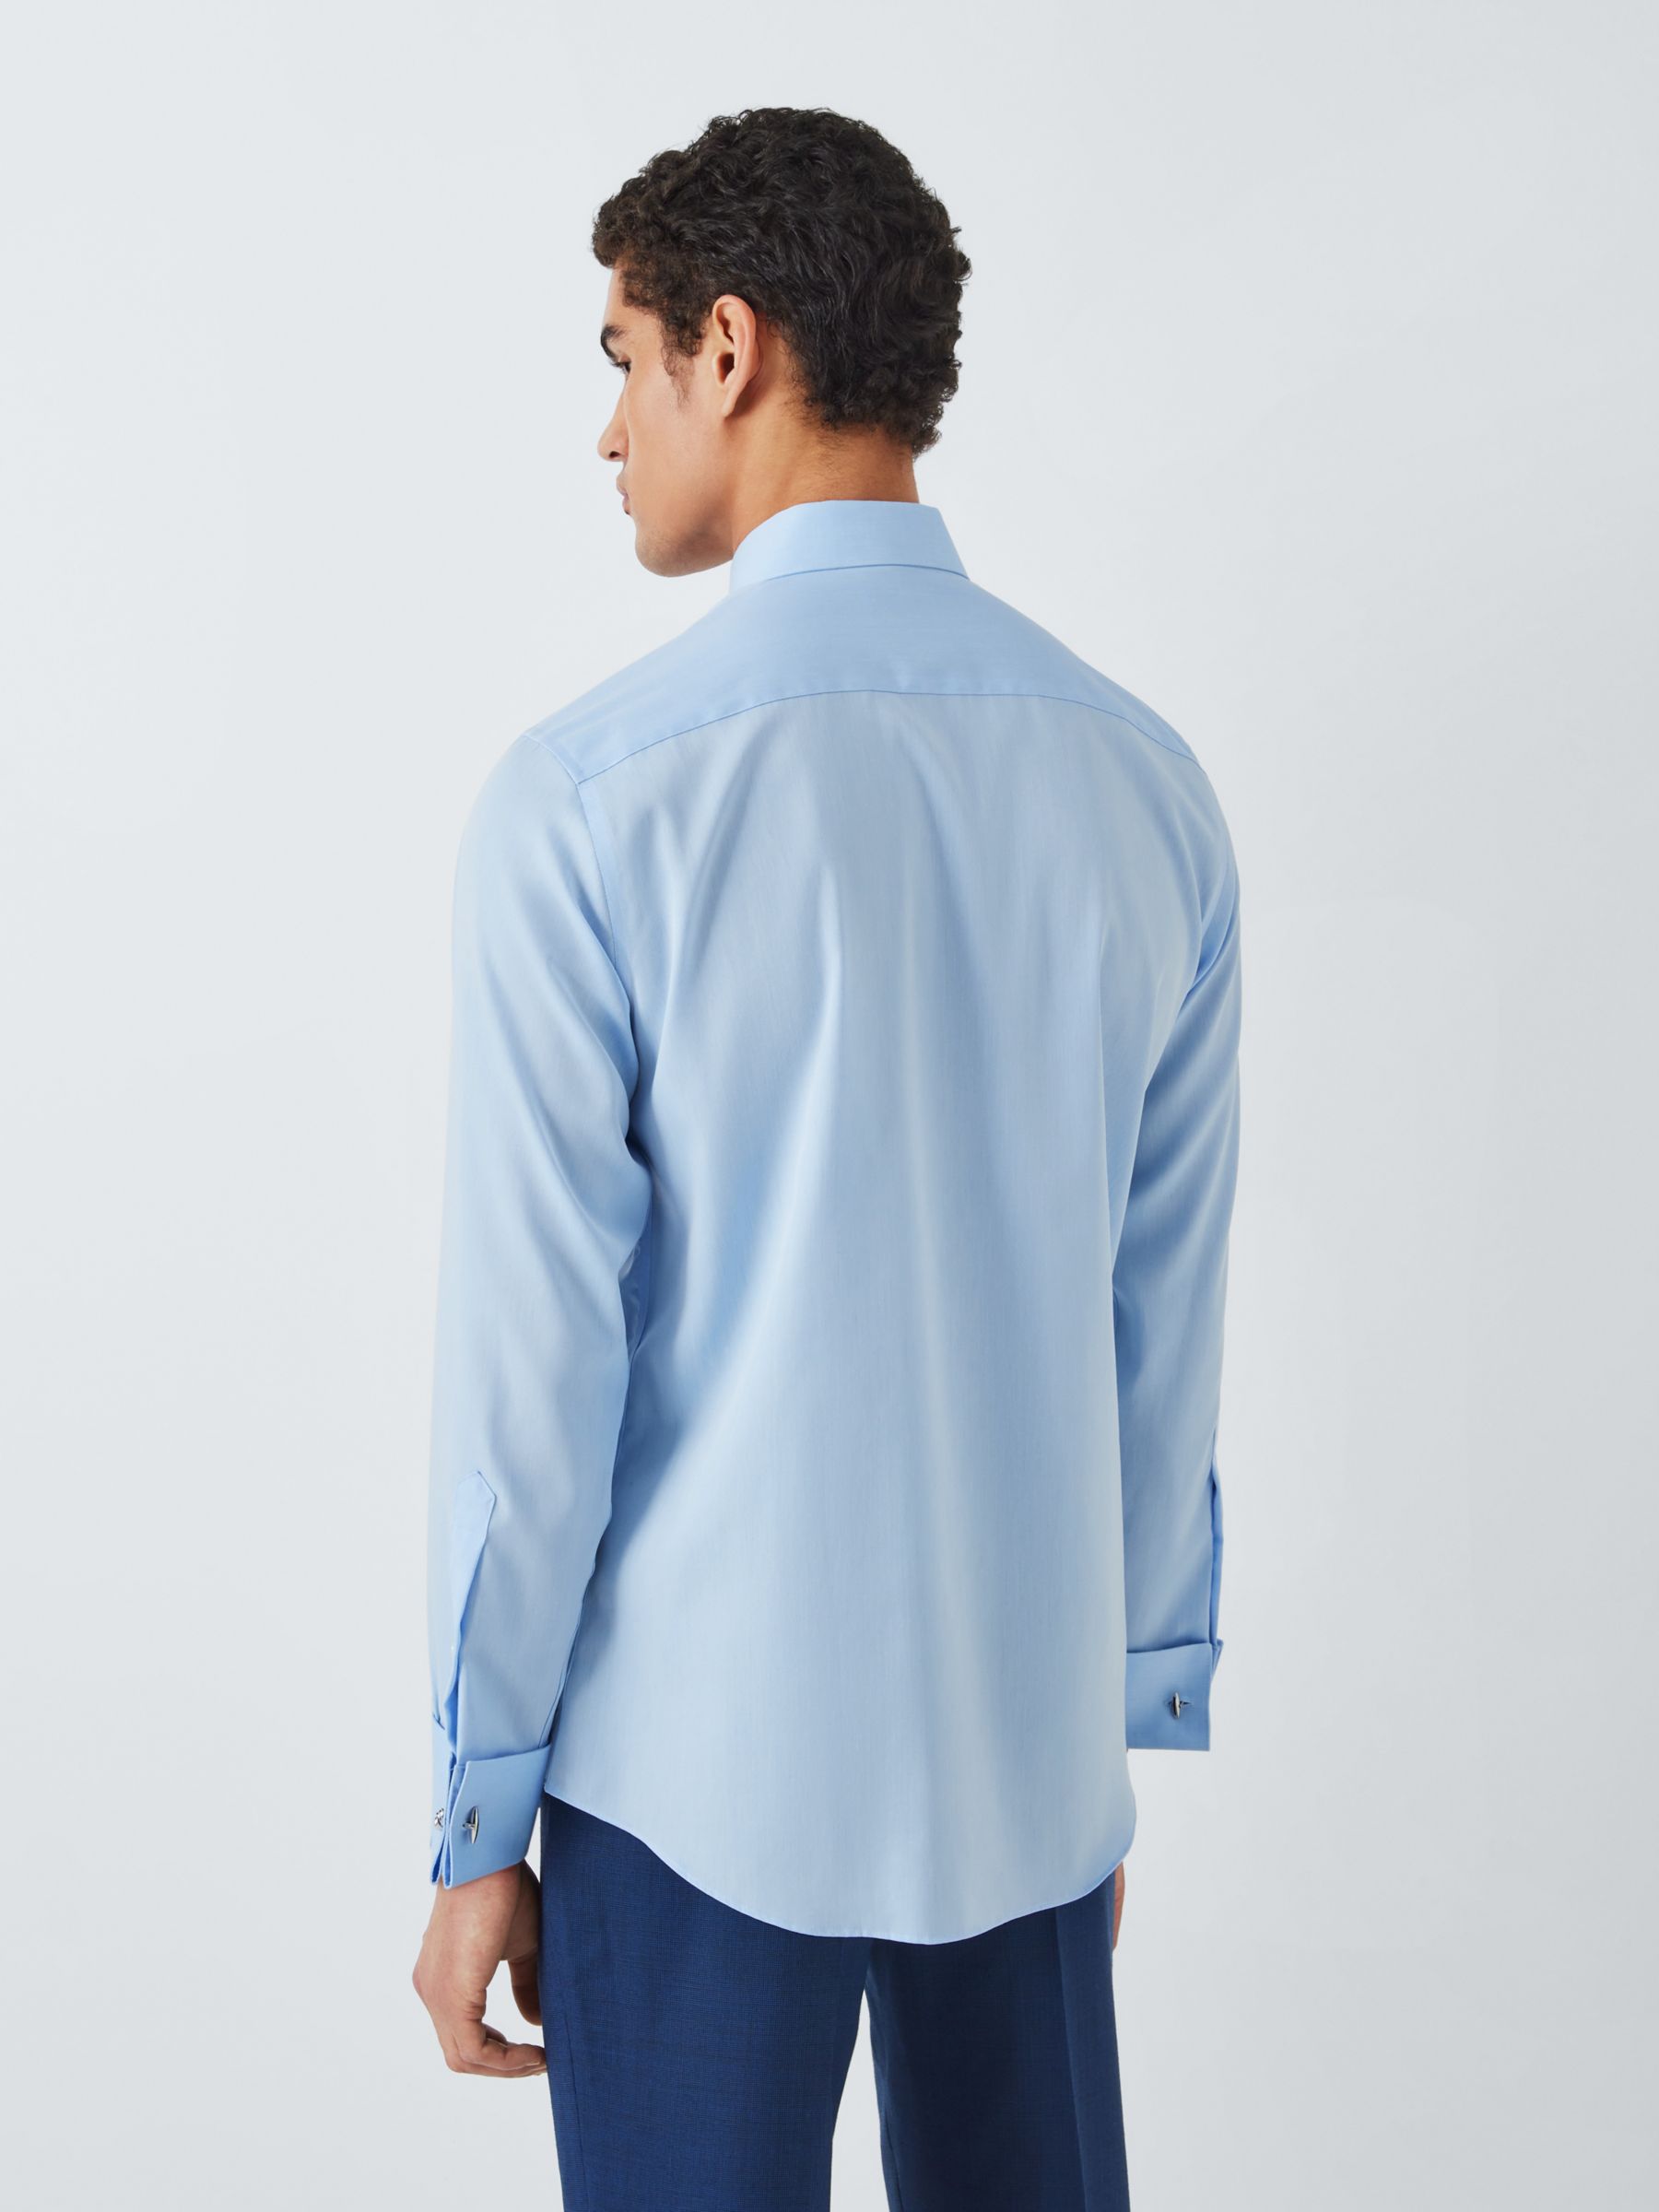 John Lewis Twill Tailored Fit Shirt, Blue, 17R